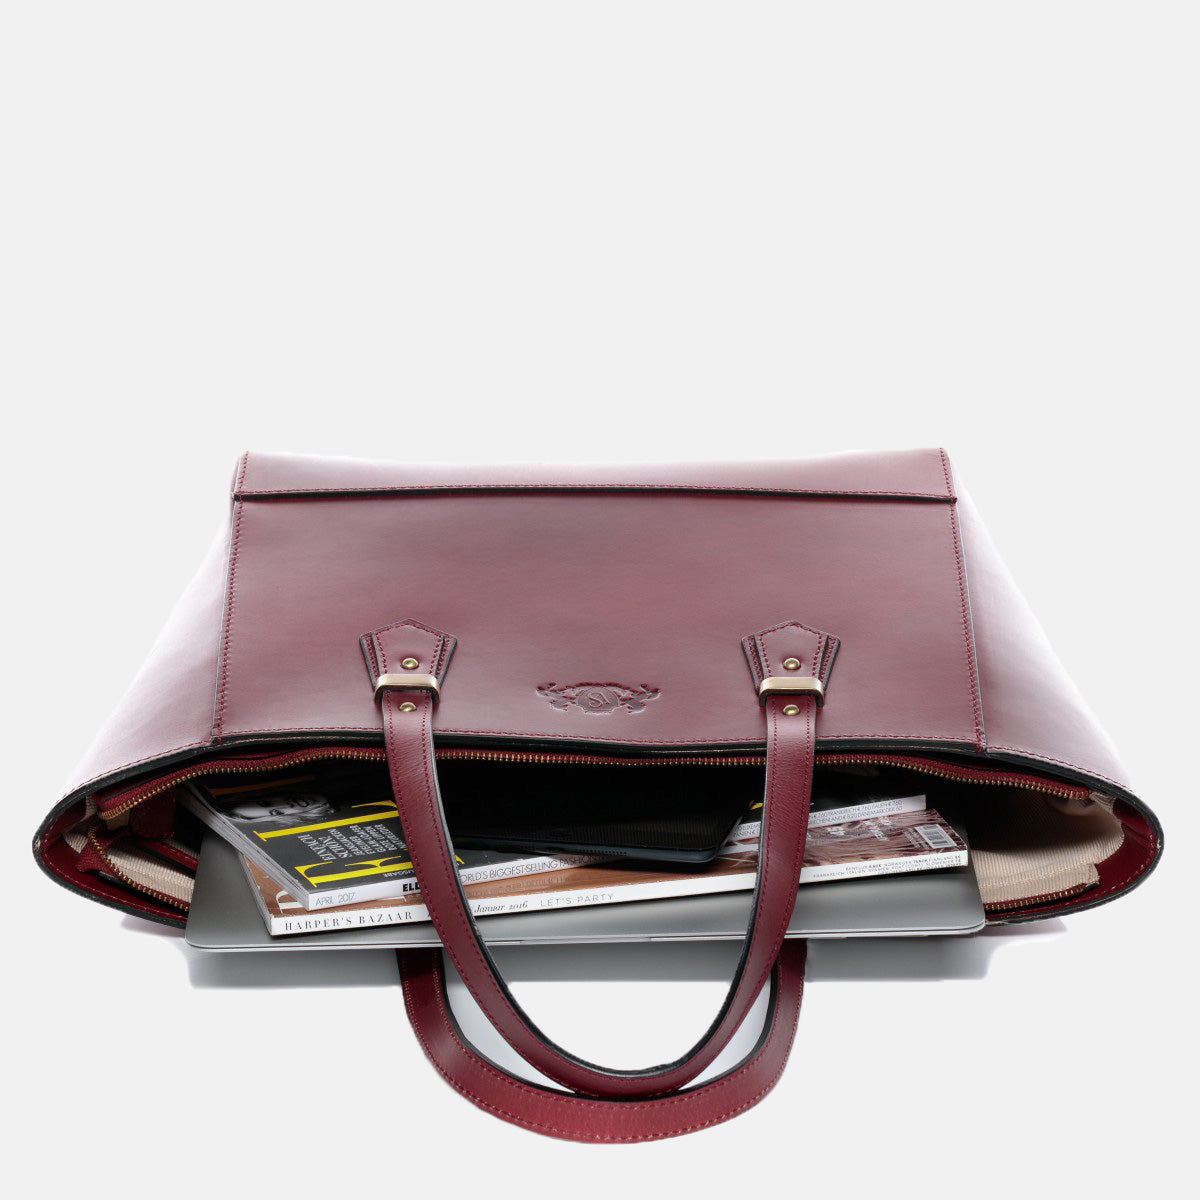 Handbag TRISH saddle leather red